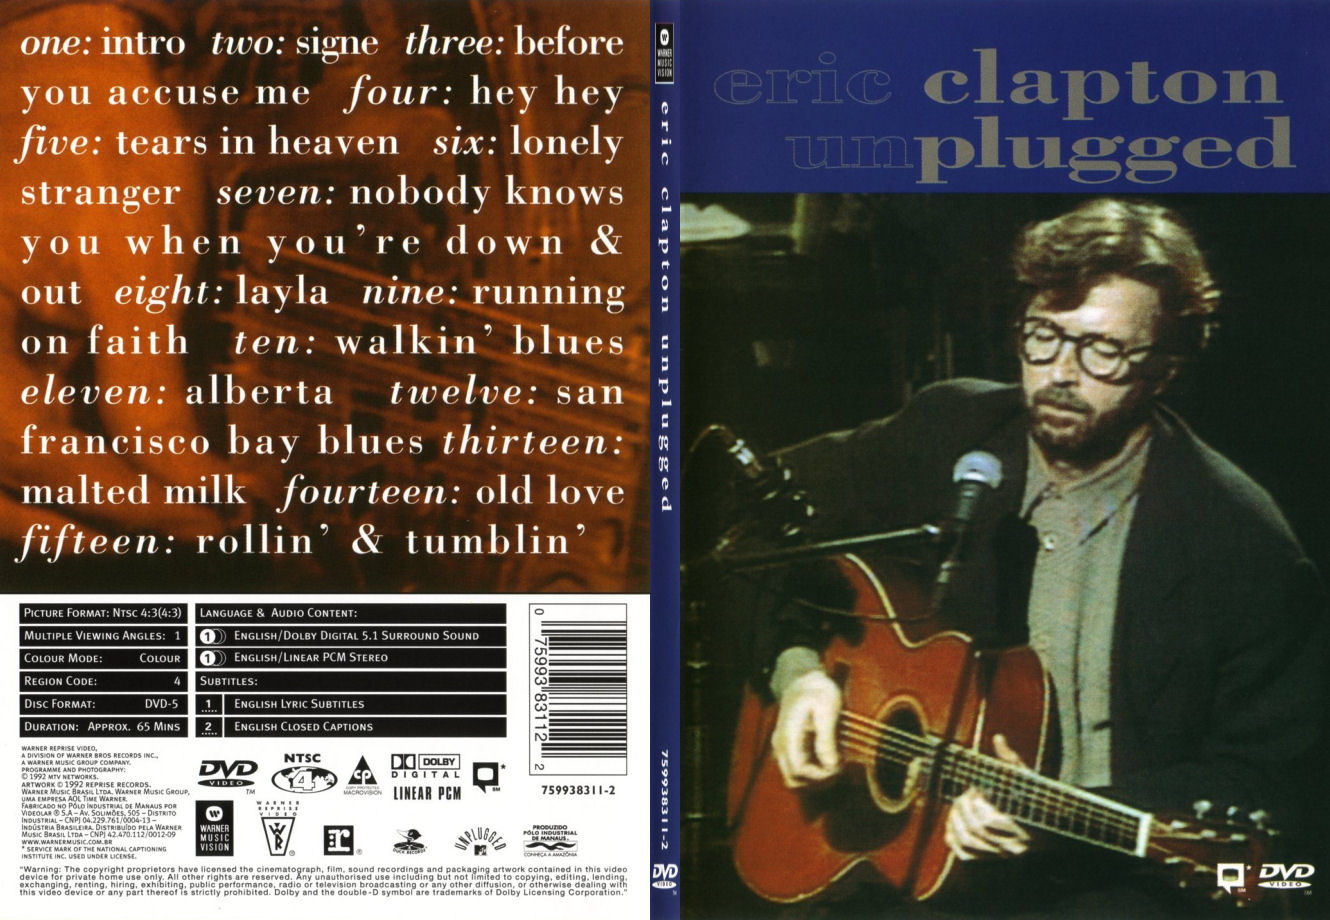 Jaquette DVD Eric Clapton - Unplugged - SLIM